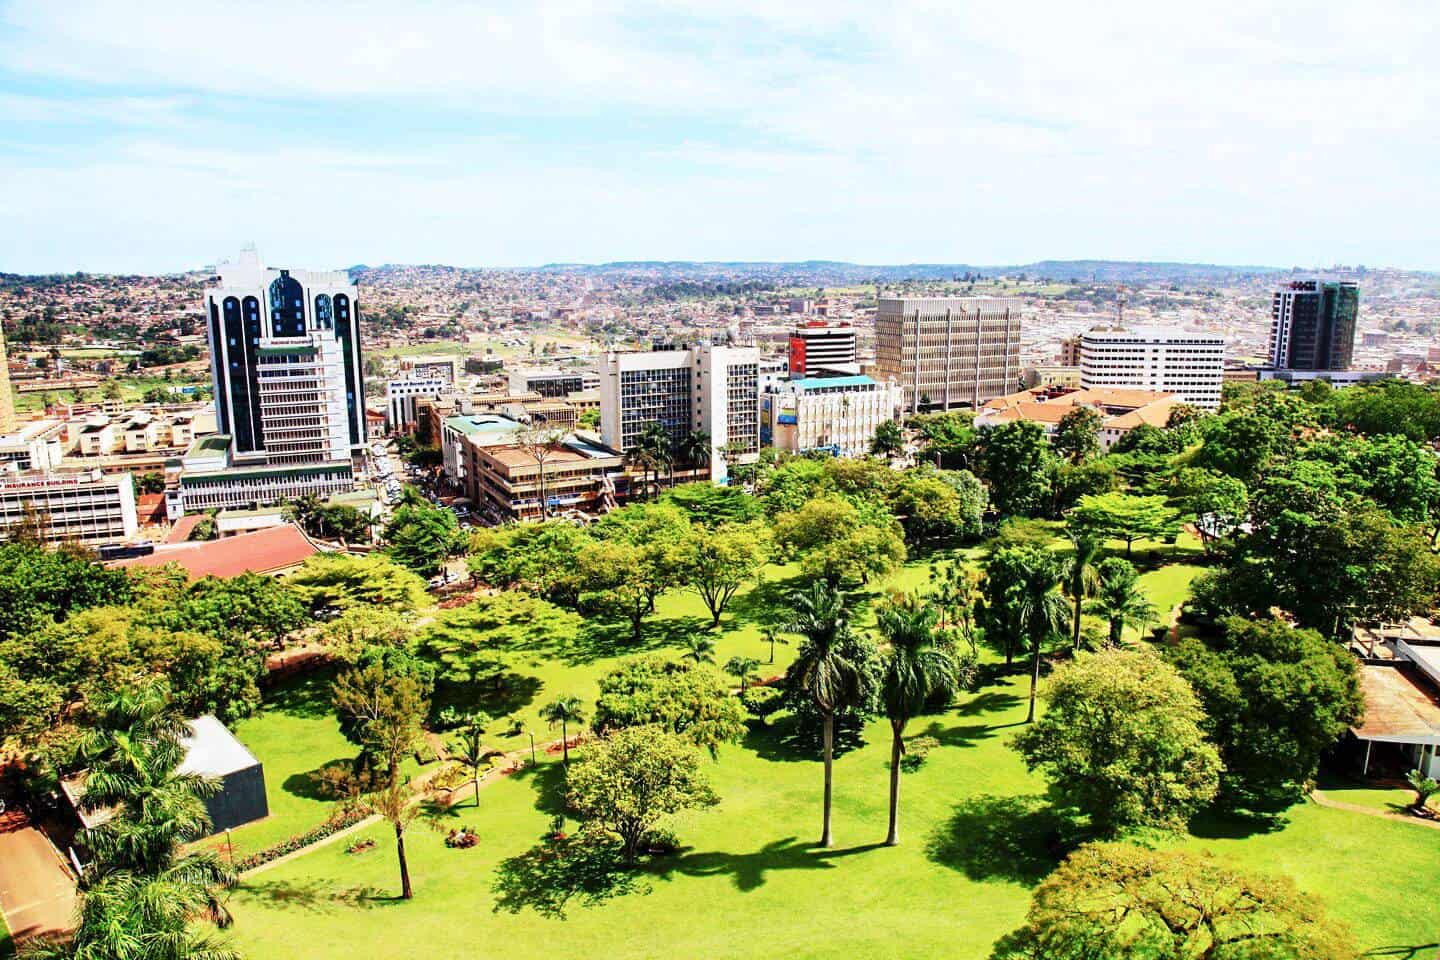 Bustling Cities & Towns Of Uganda - Kampala, Entebbe, & Fort Portal